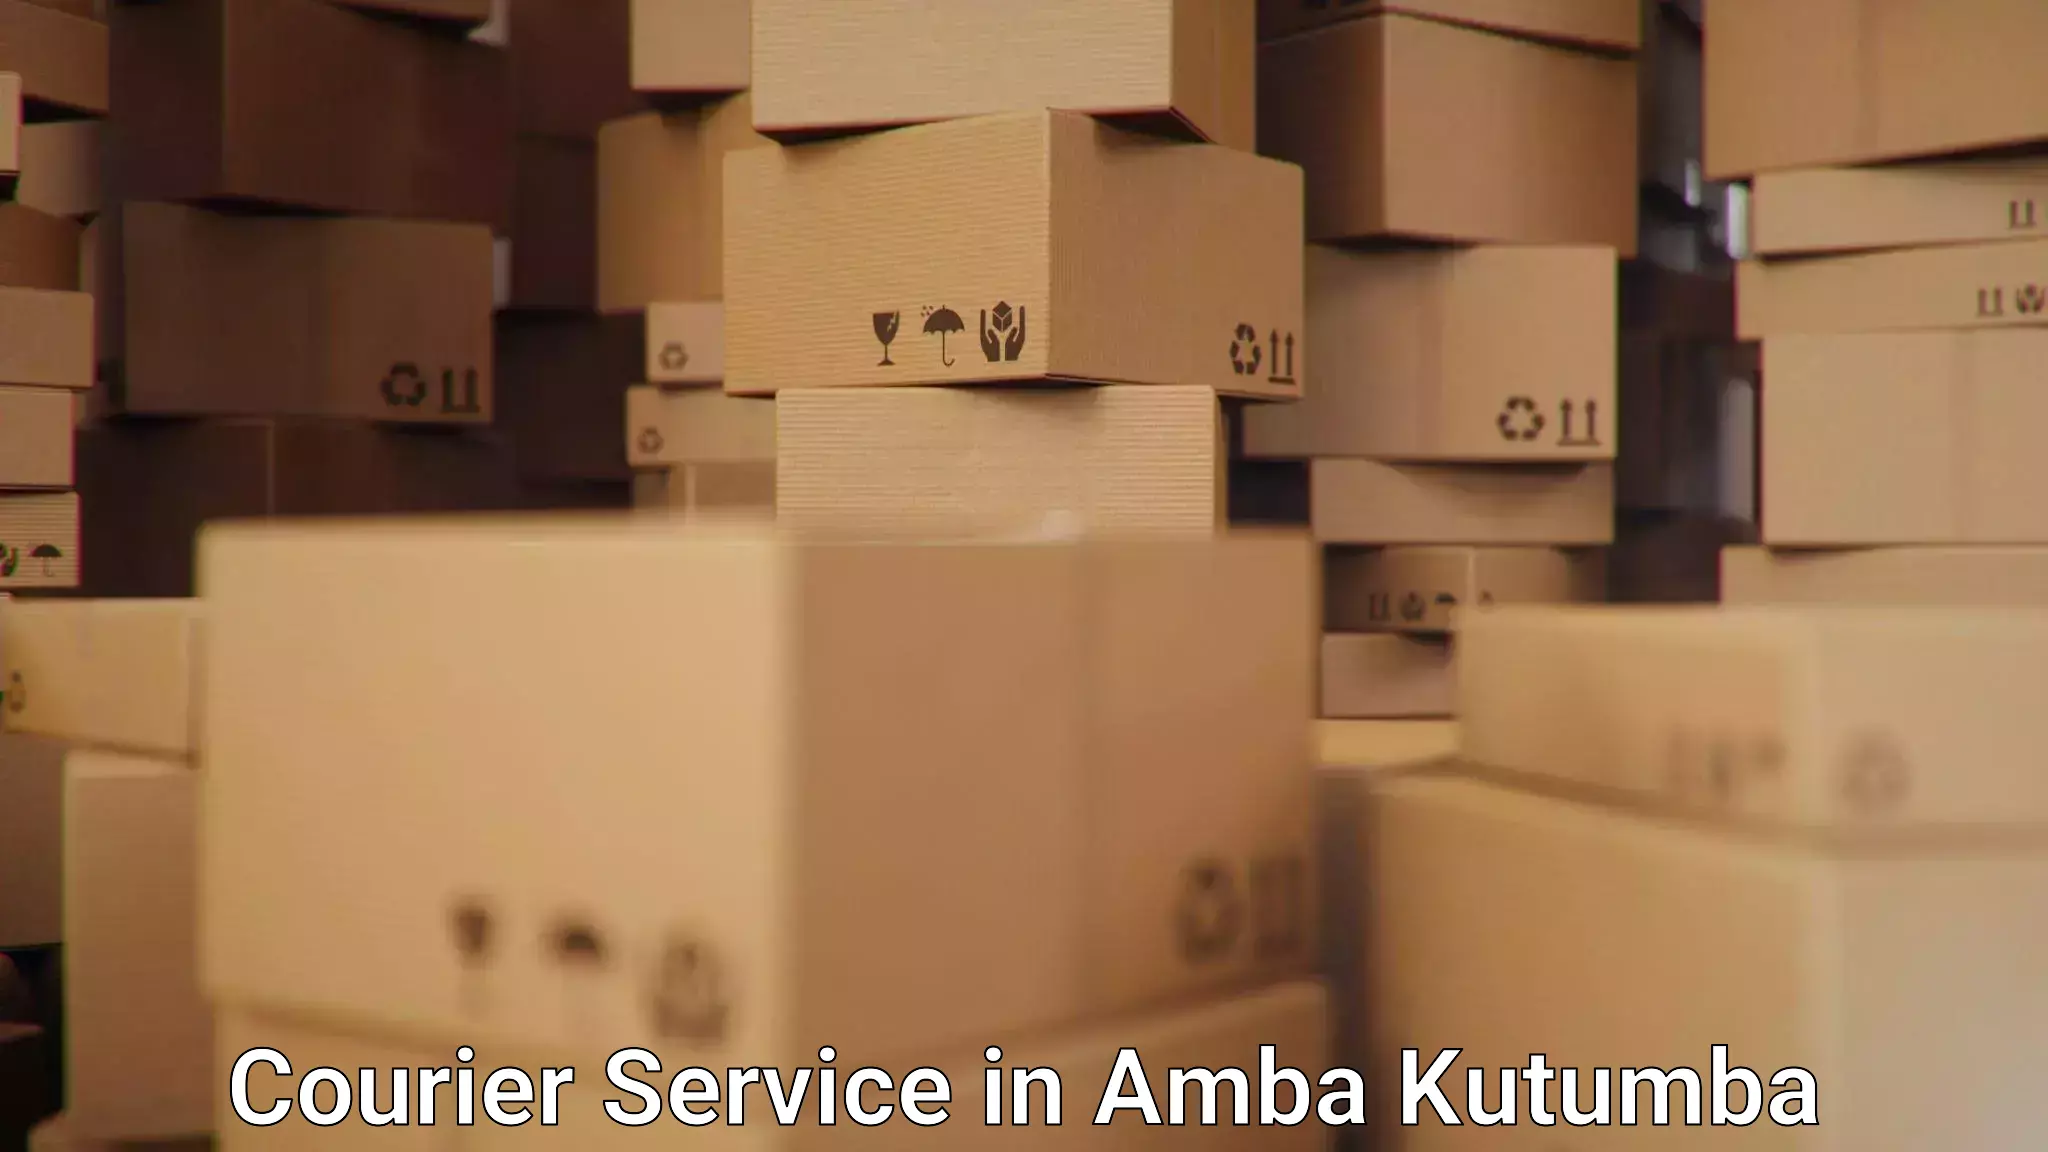 Optimized delivery routes in Amba Kutumba